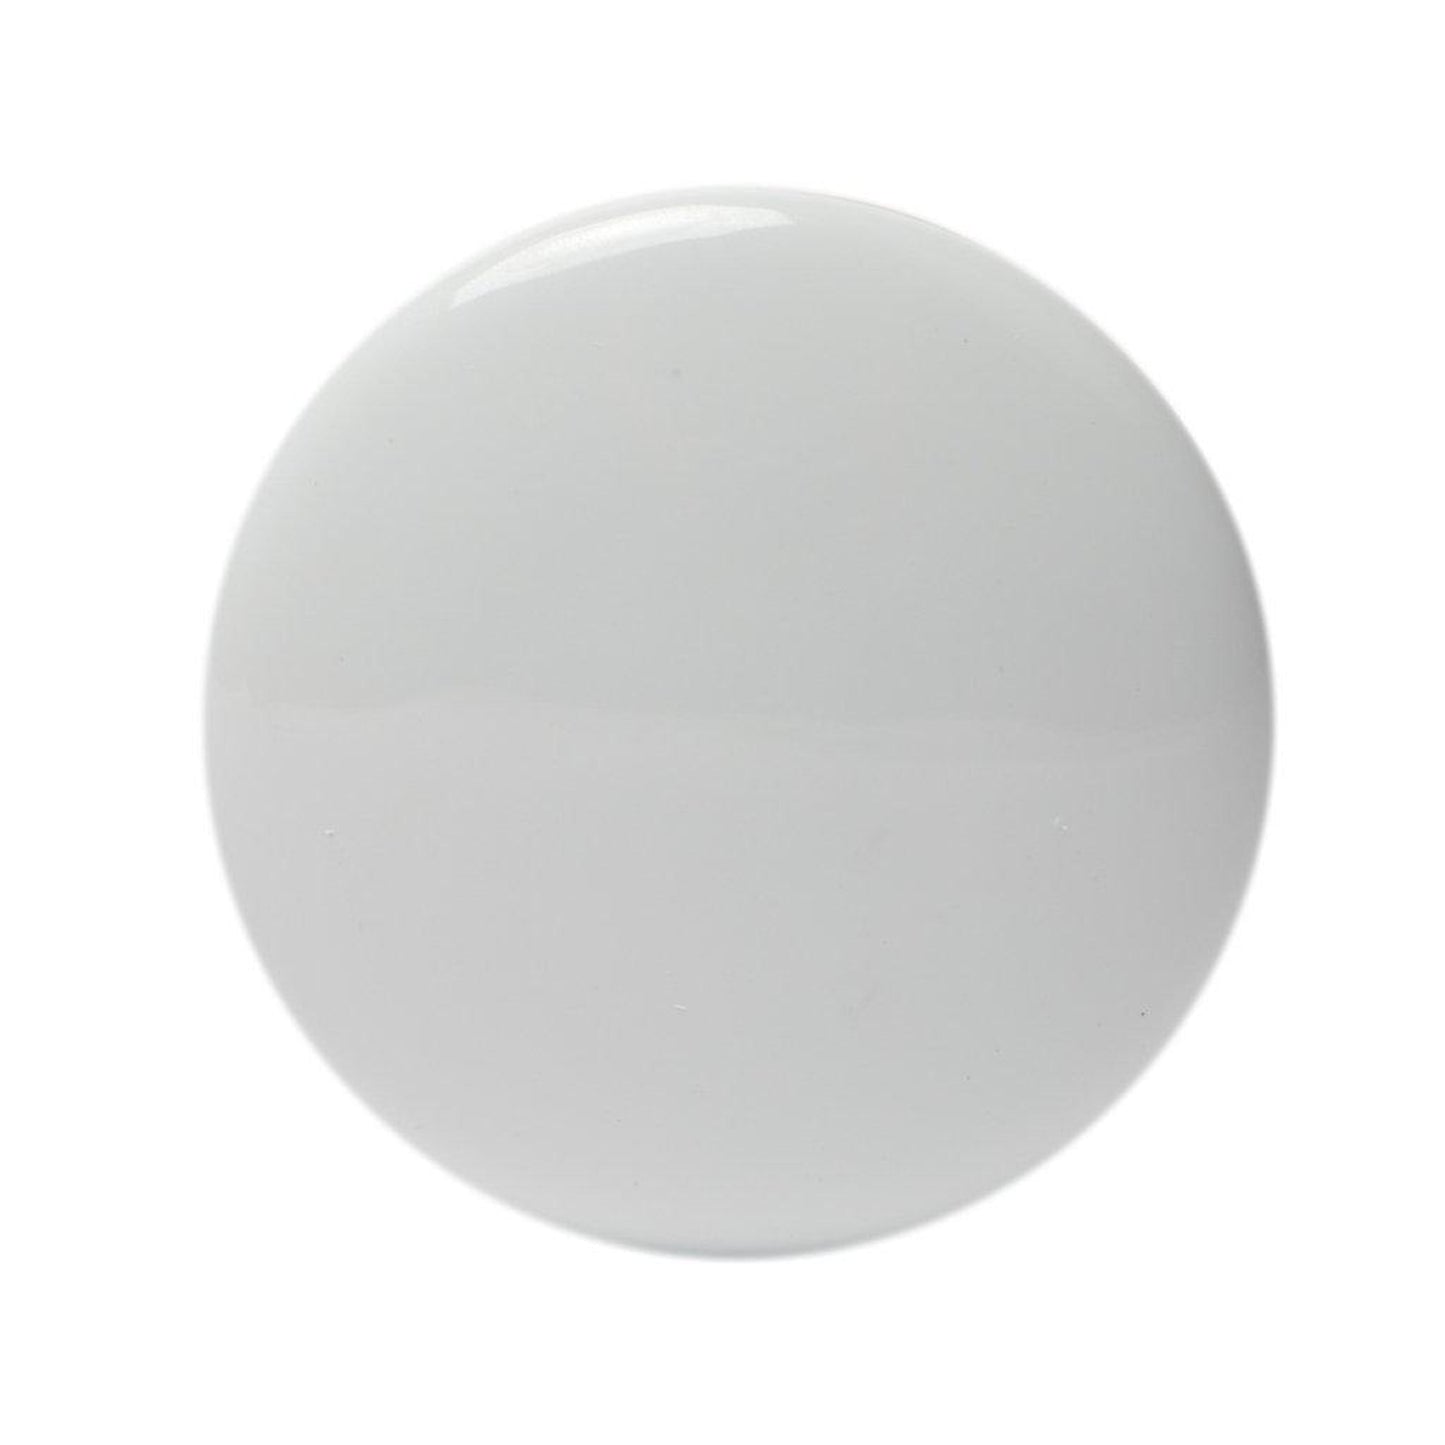 ALFI Brand AB8056-W White Ceramic Mushroom Top Pop Up Bathroom Sink Drain With Overflow